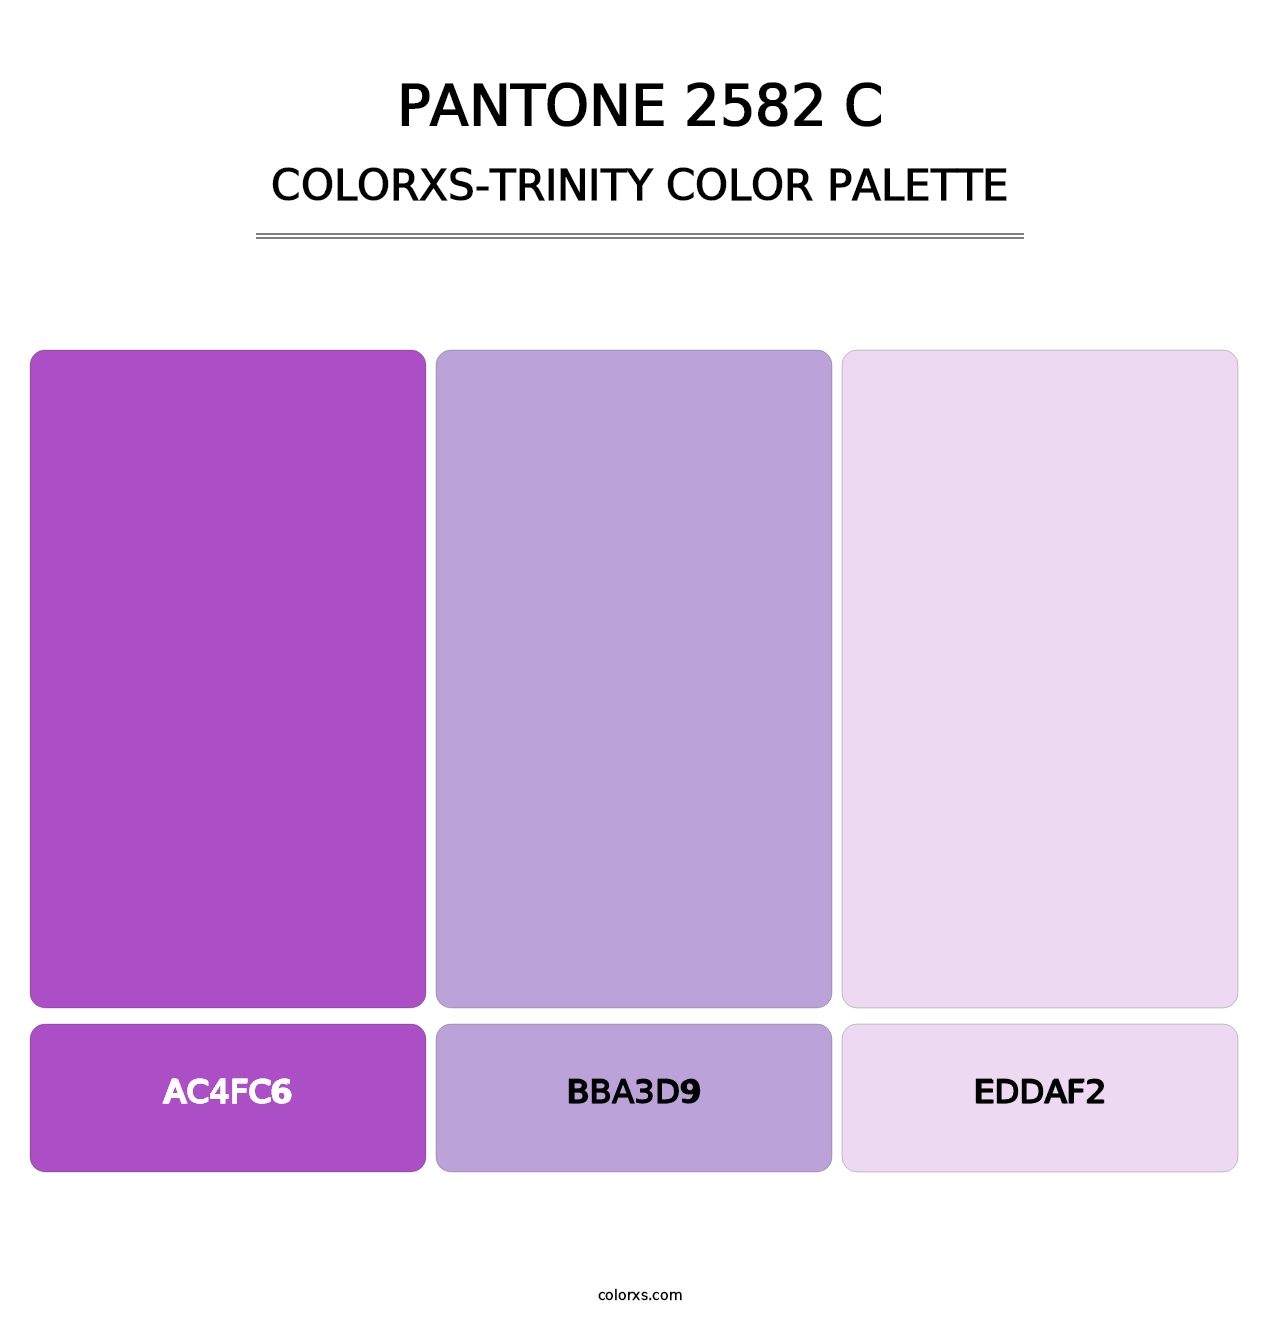 PANTONE 2582 C - Colorxs Trinity Palette